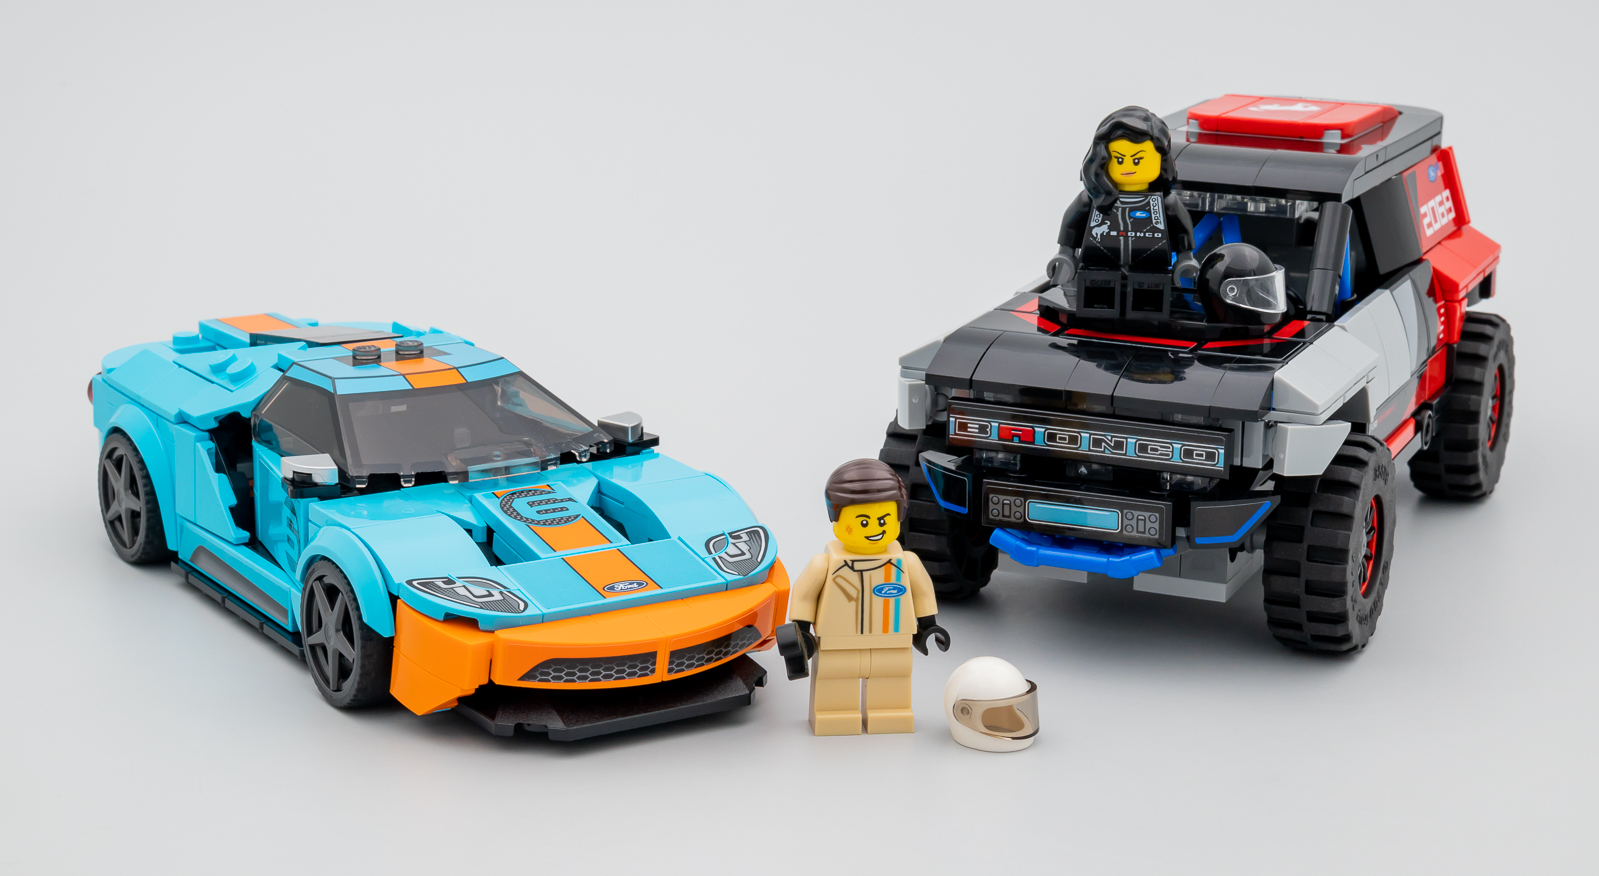 Les Ford GT et GT40 en LEGO